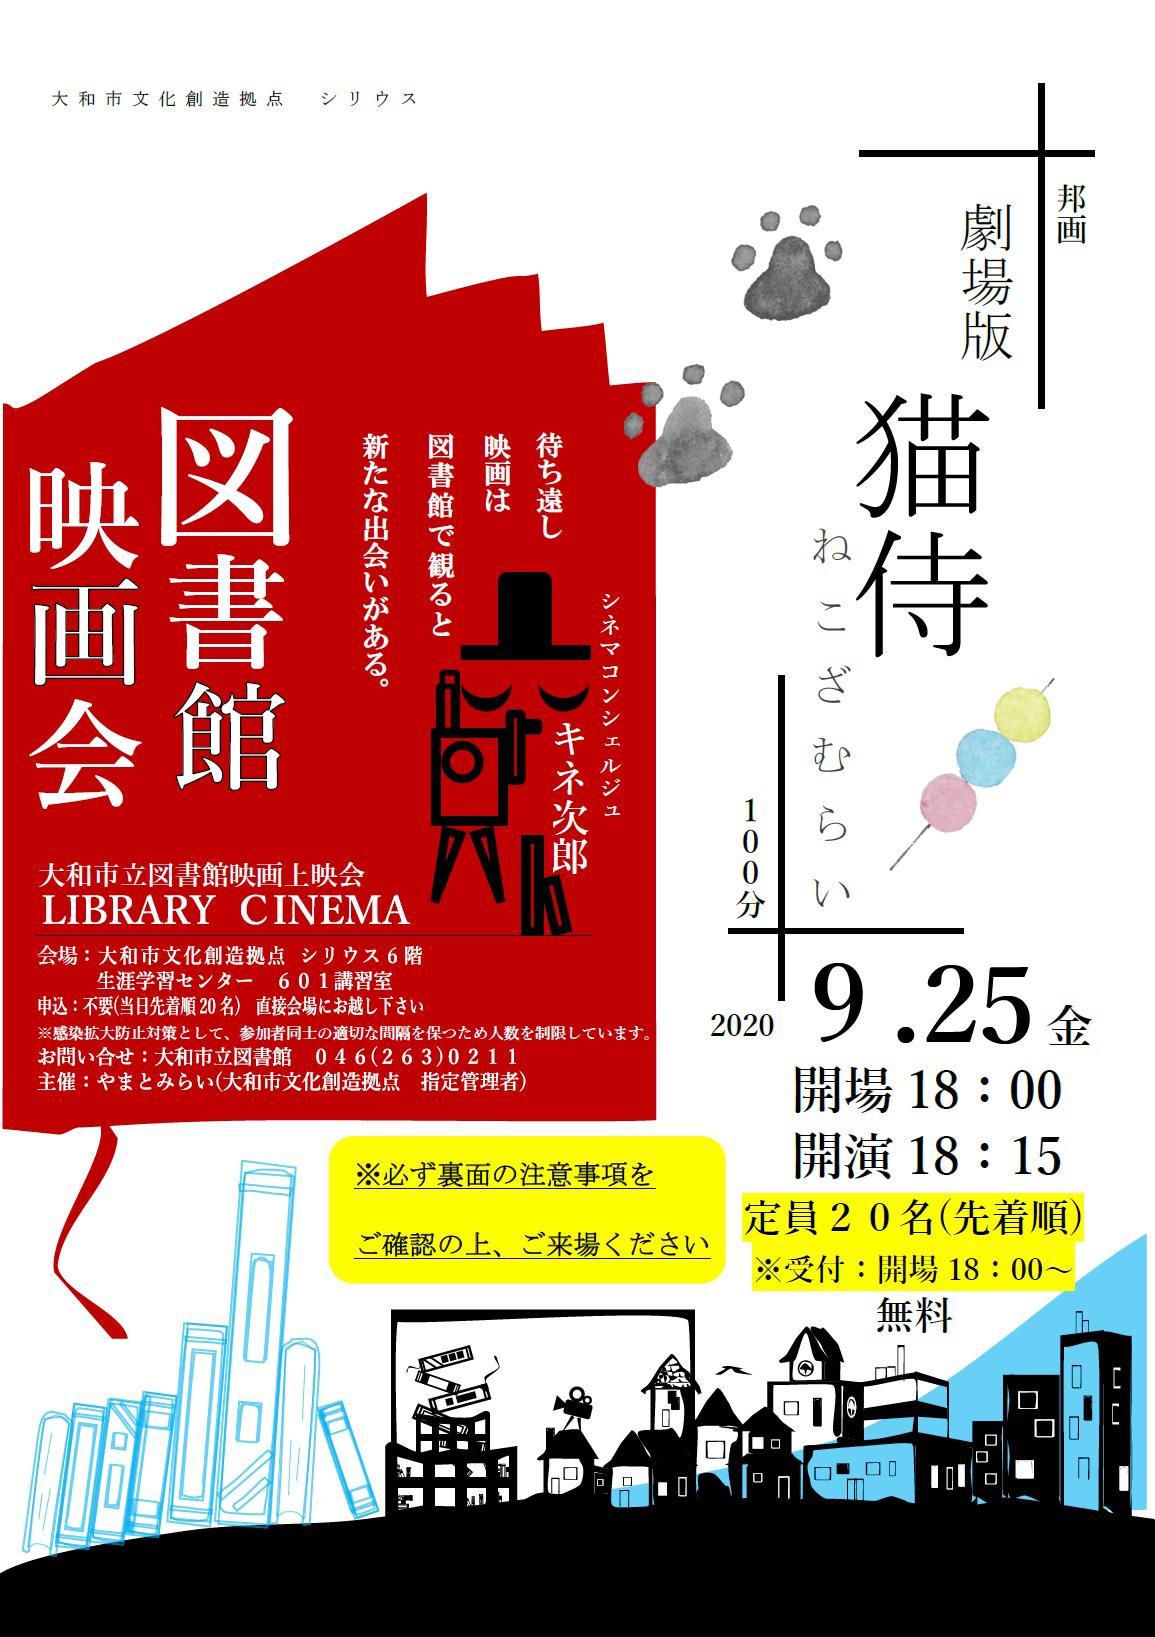 LIBRARY CINEMA第59回 大和市立図書館映画上映会「猫侍」